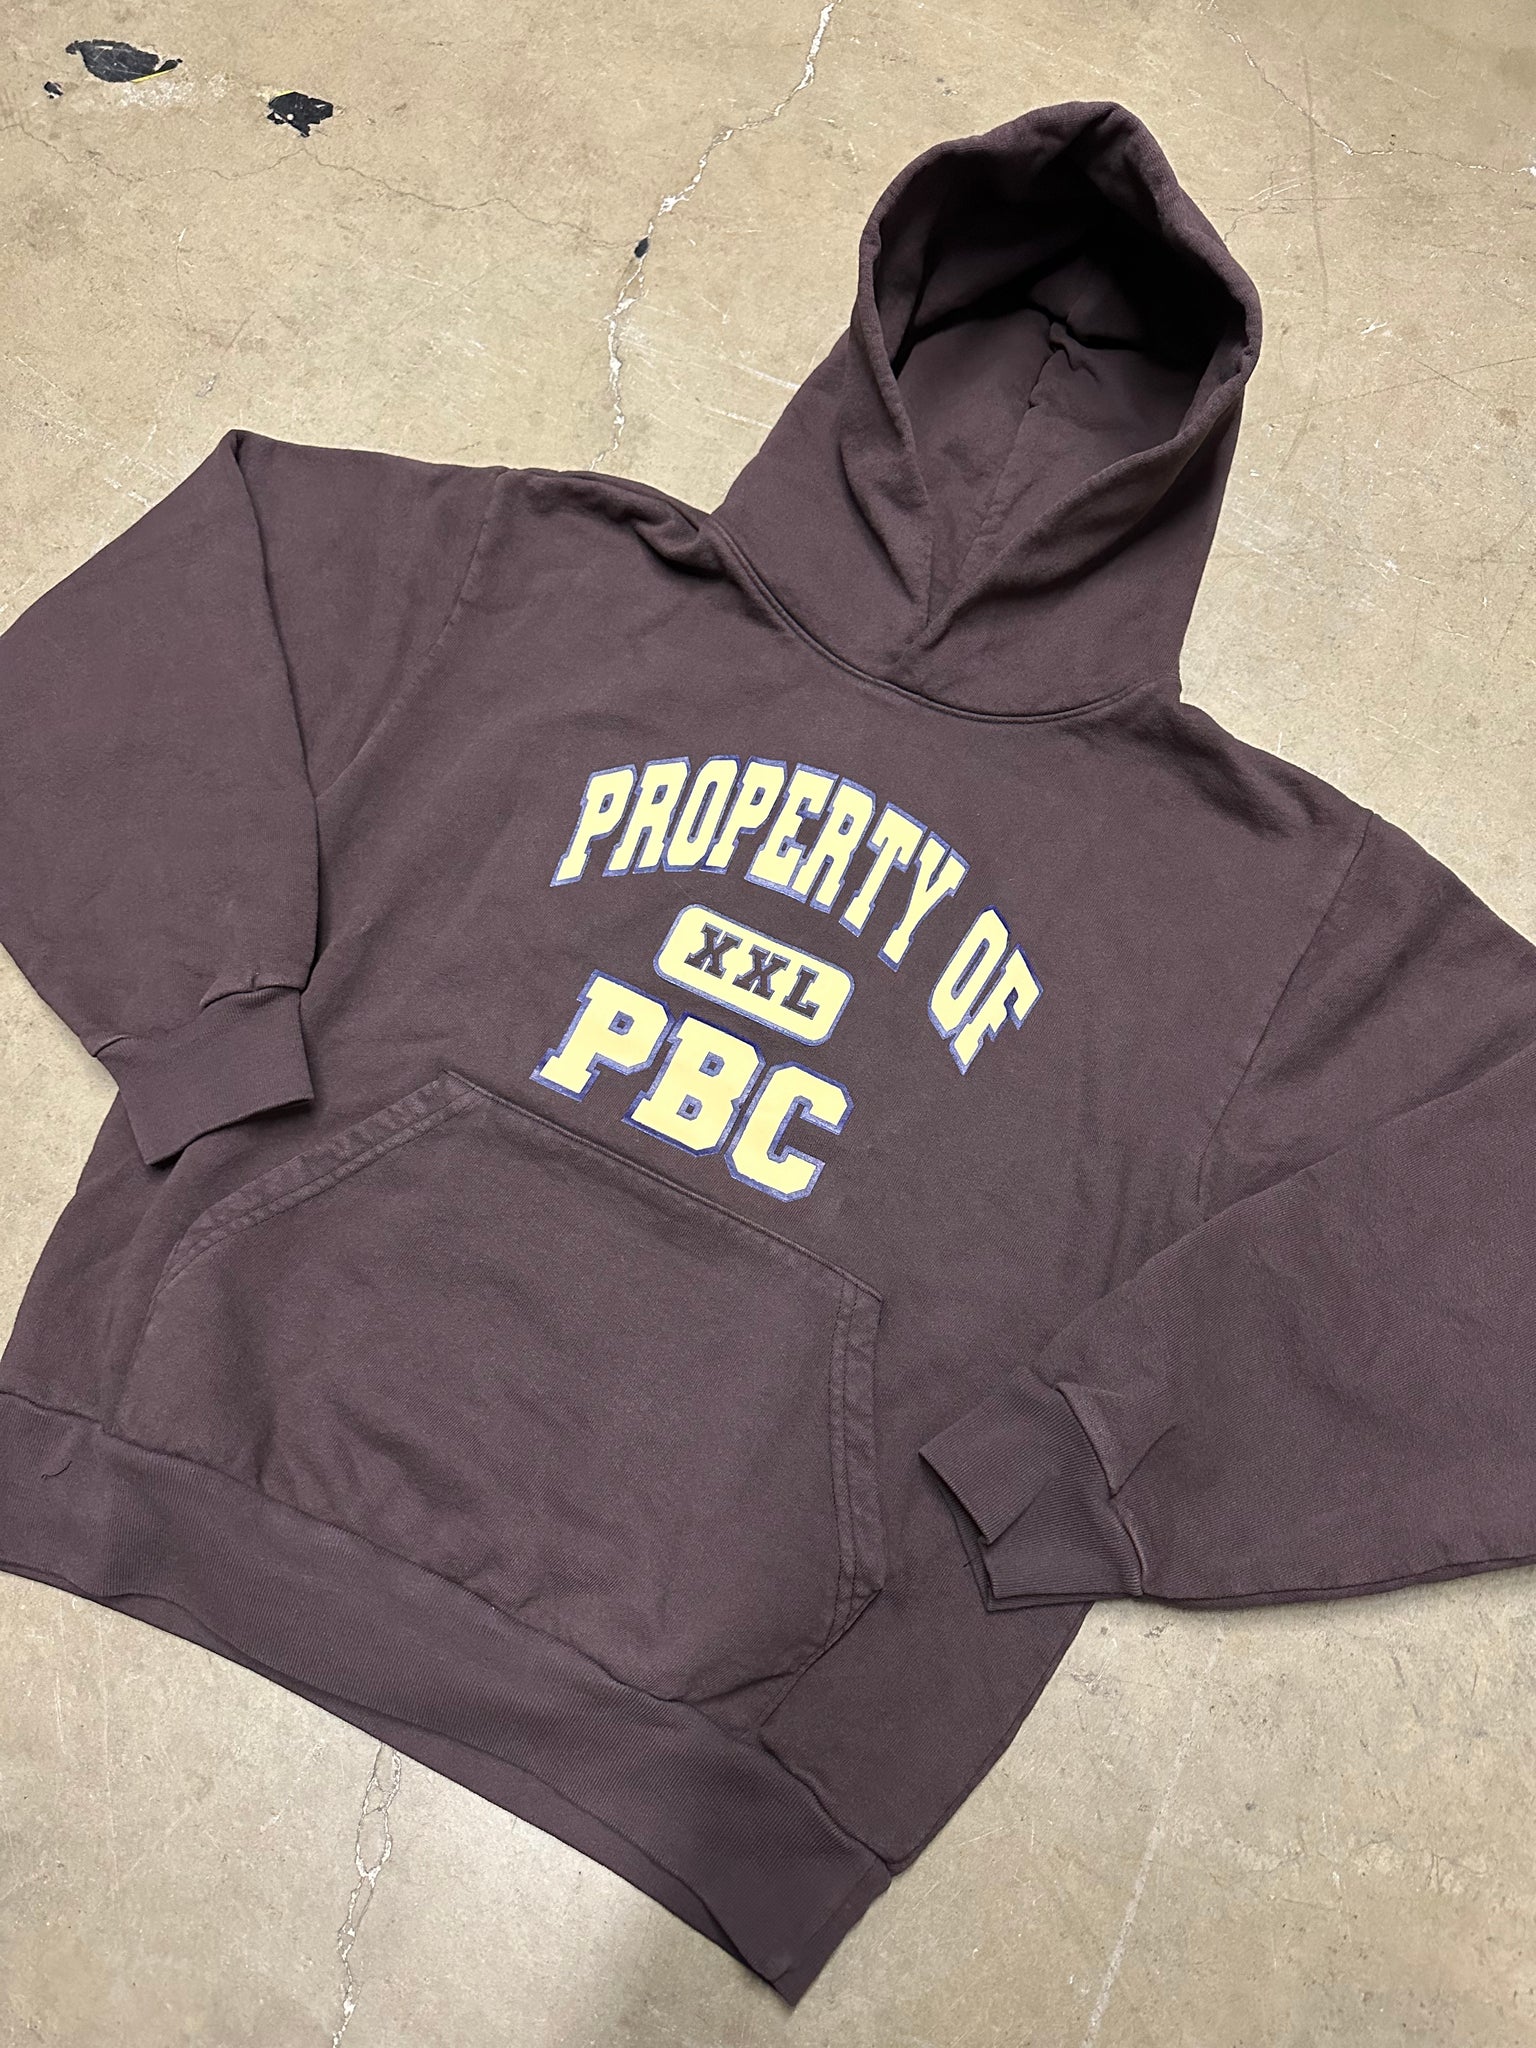 Property of PBC Heavyweight Hooded Sweatshirt (All colors)